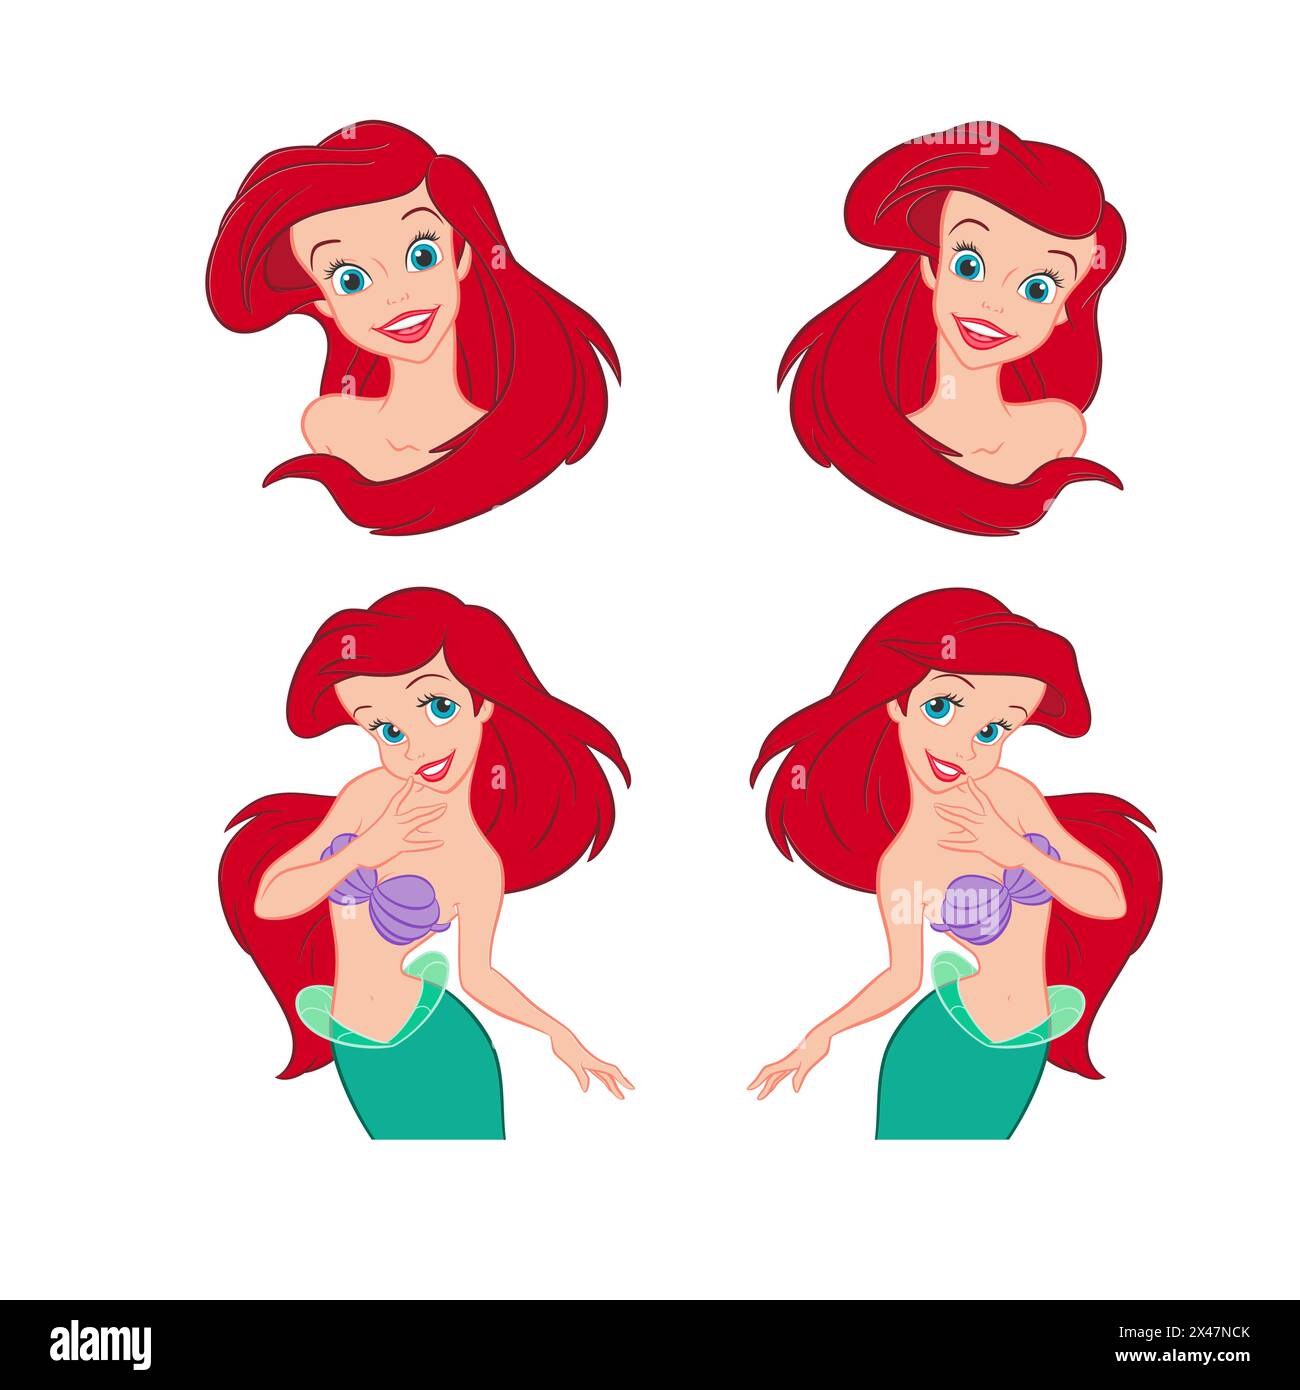 Disney princess ariel mermaid fairy tale fantasy vector illustration Stock Vector